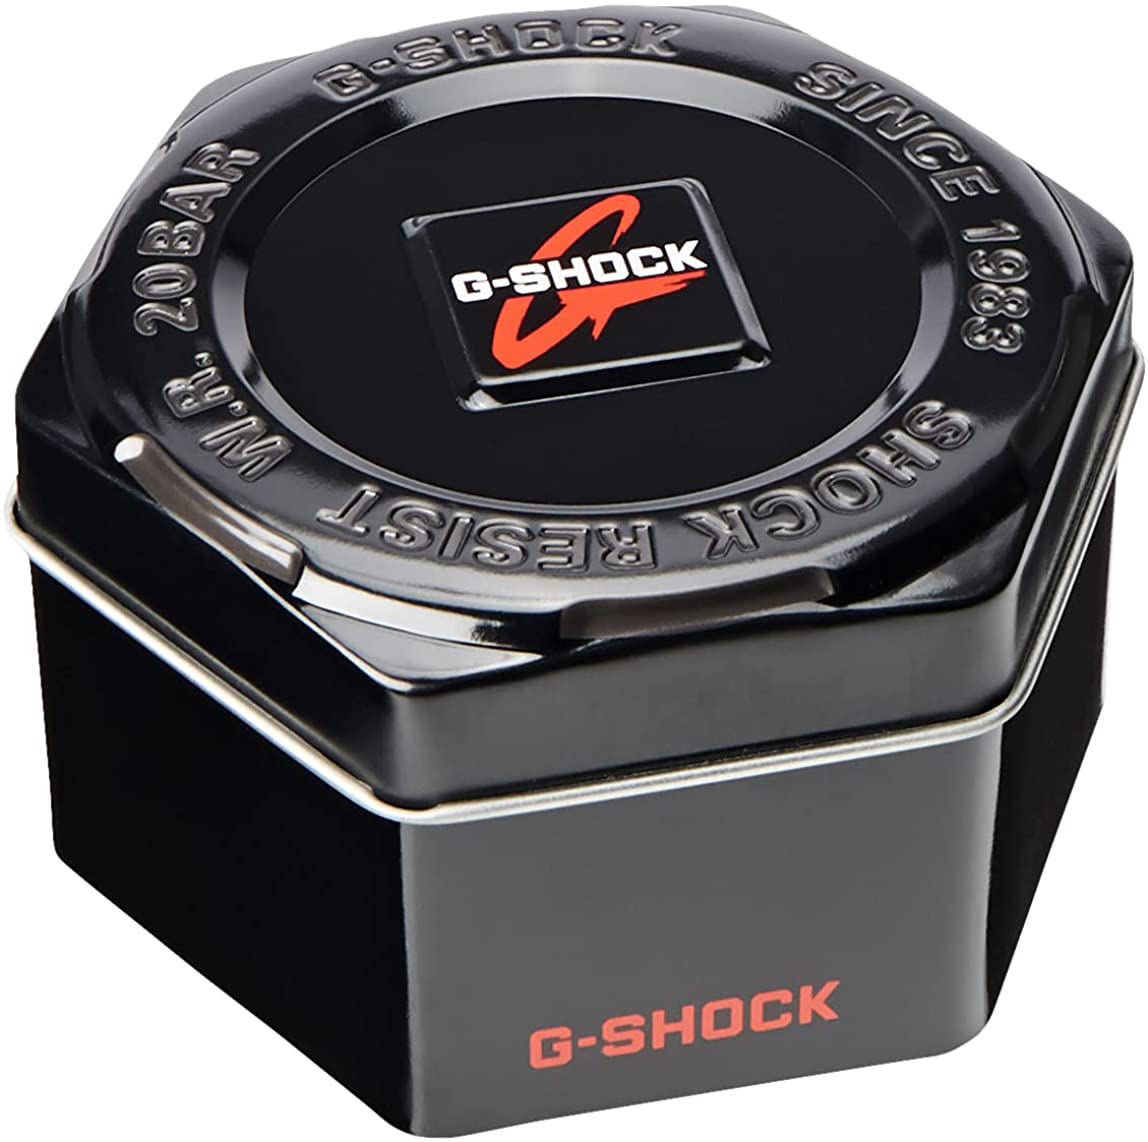 Casio G-Shock Quartz with Resin Strap Black Men's Watch DW5600E-1V